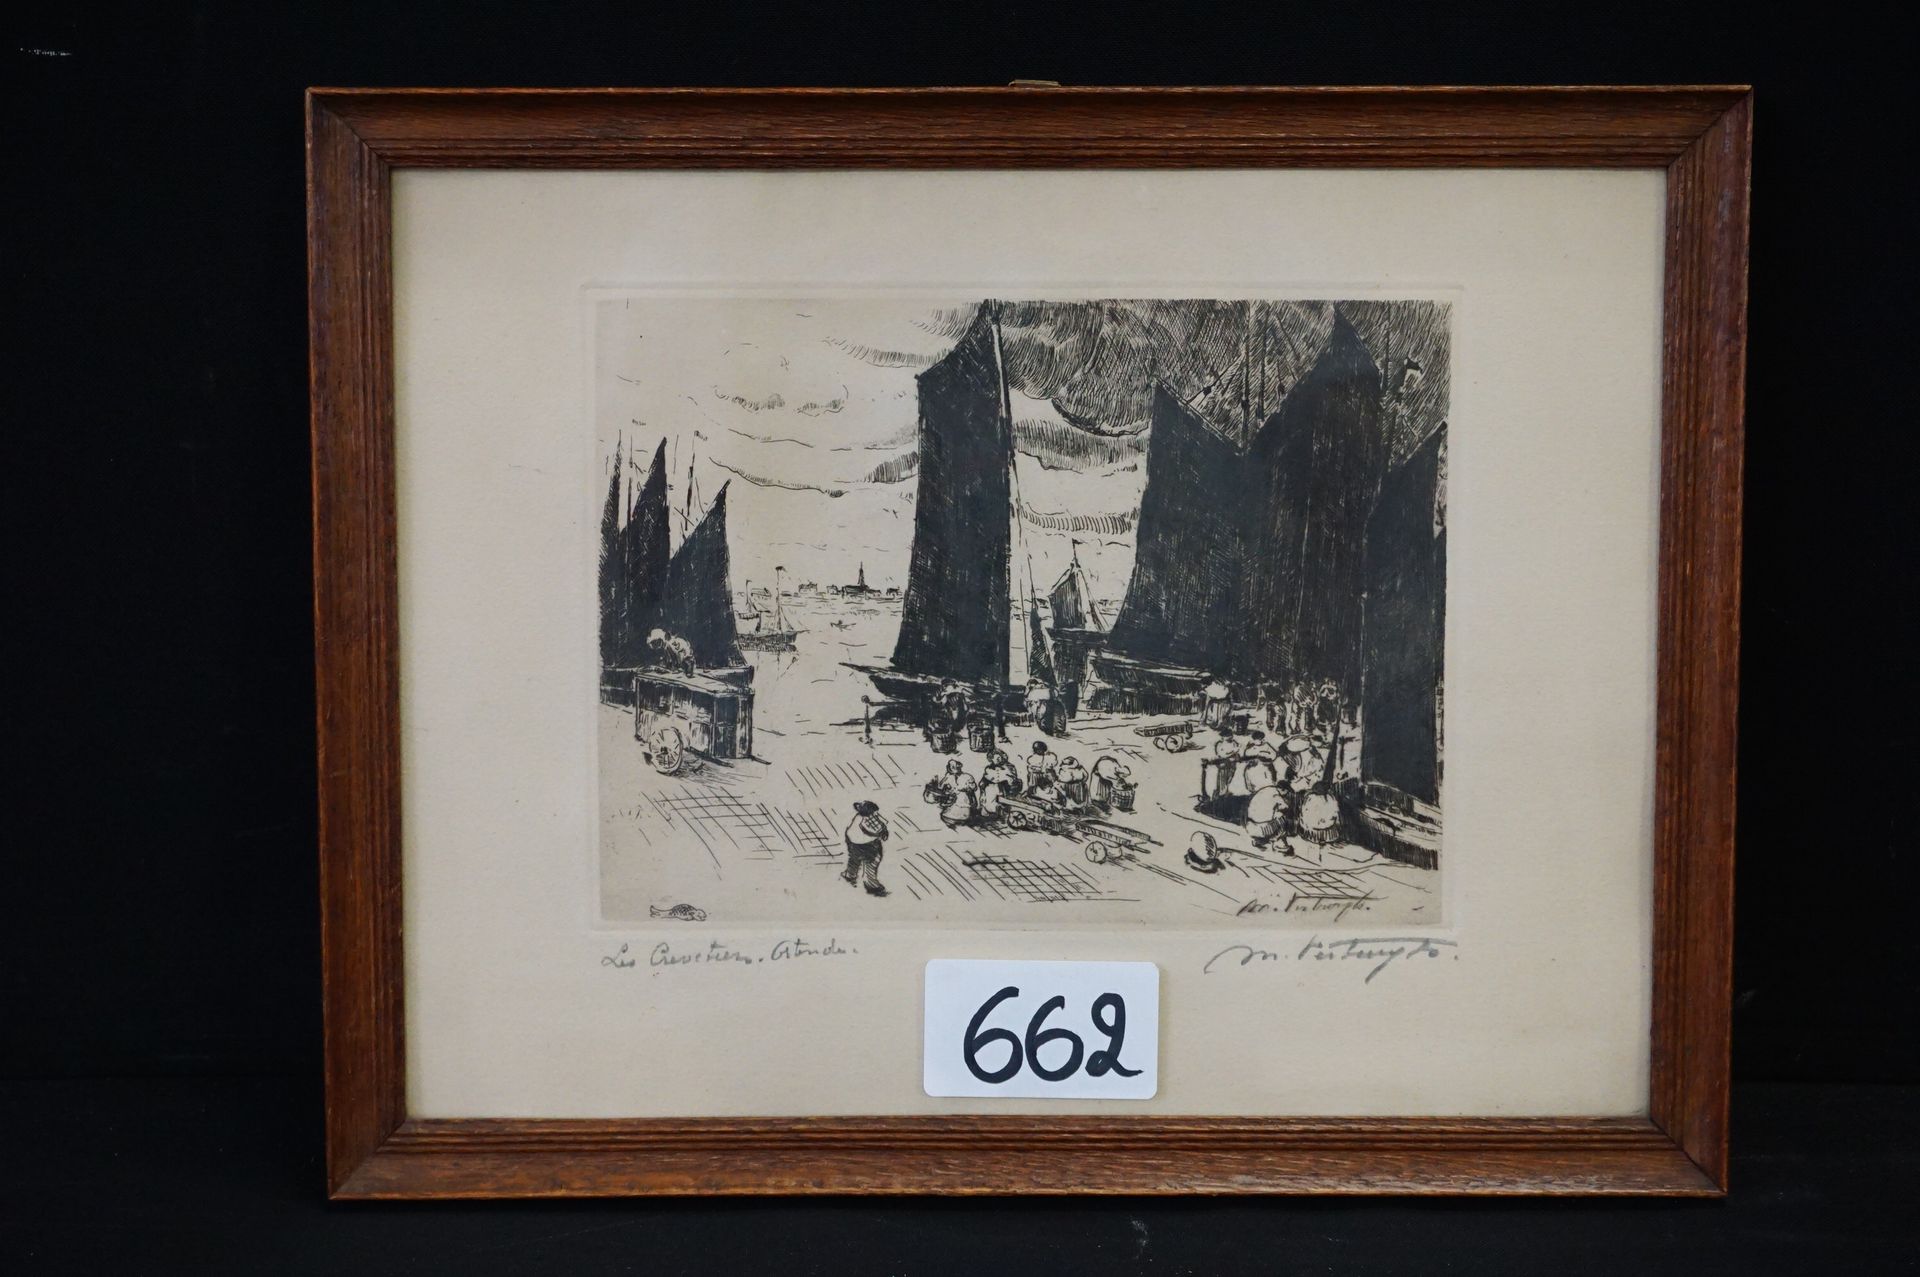 MEDARD VERBRUGH (1886 - 1957) "Les crevetiers d'Ostende" - 版画 - 已签名 - 17 x 22 cm